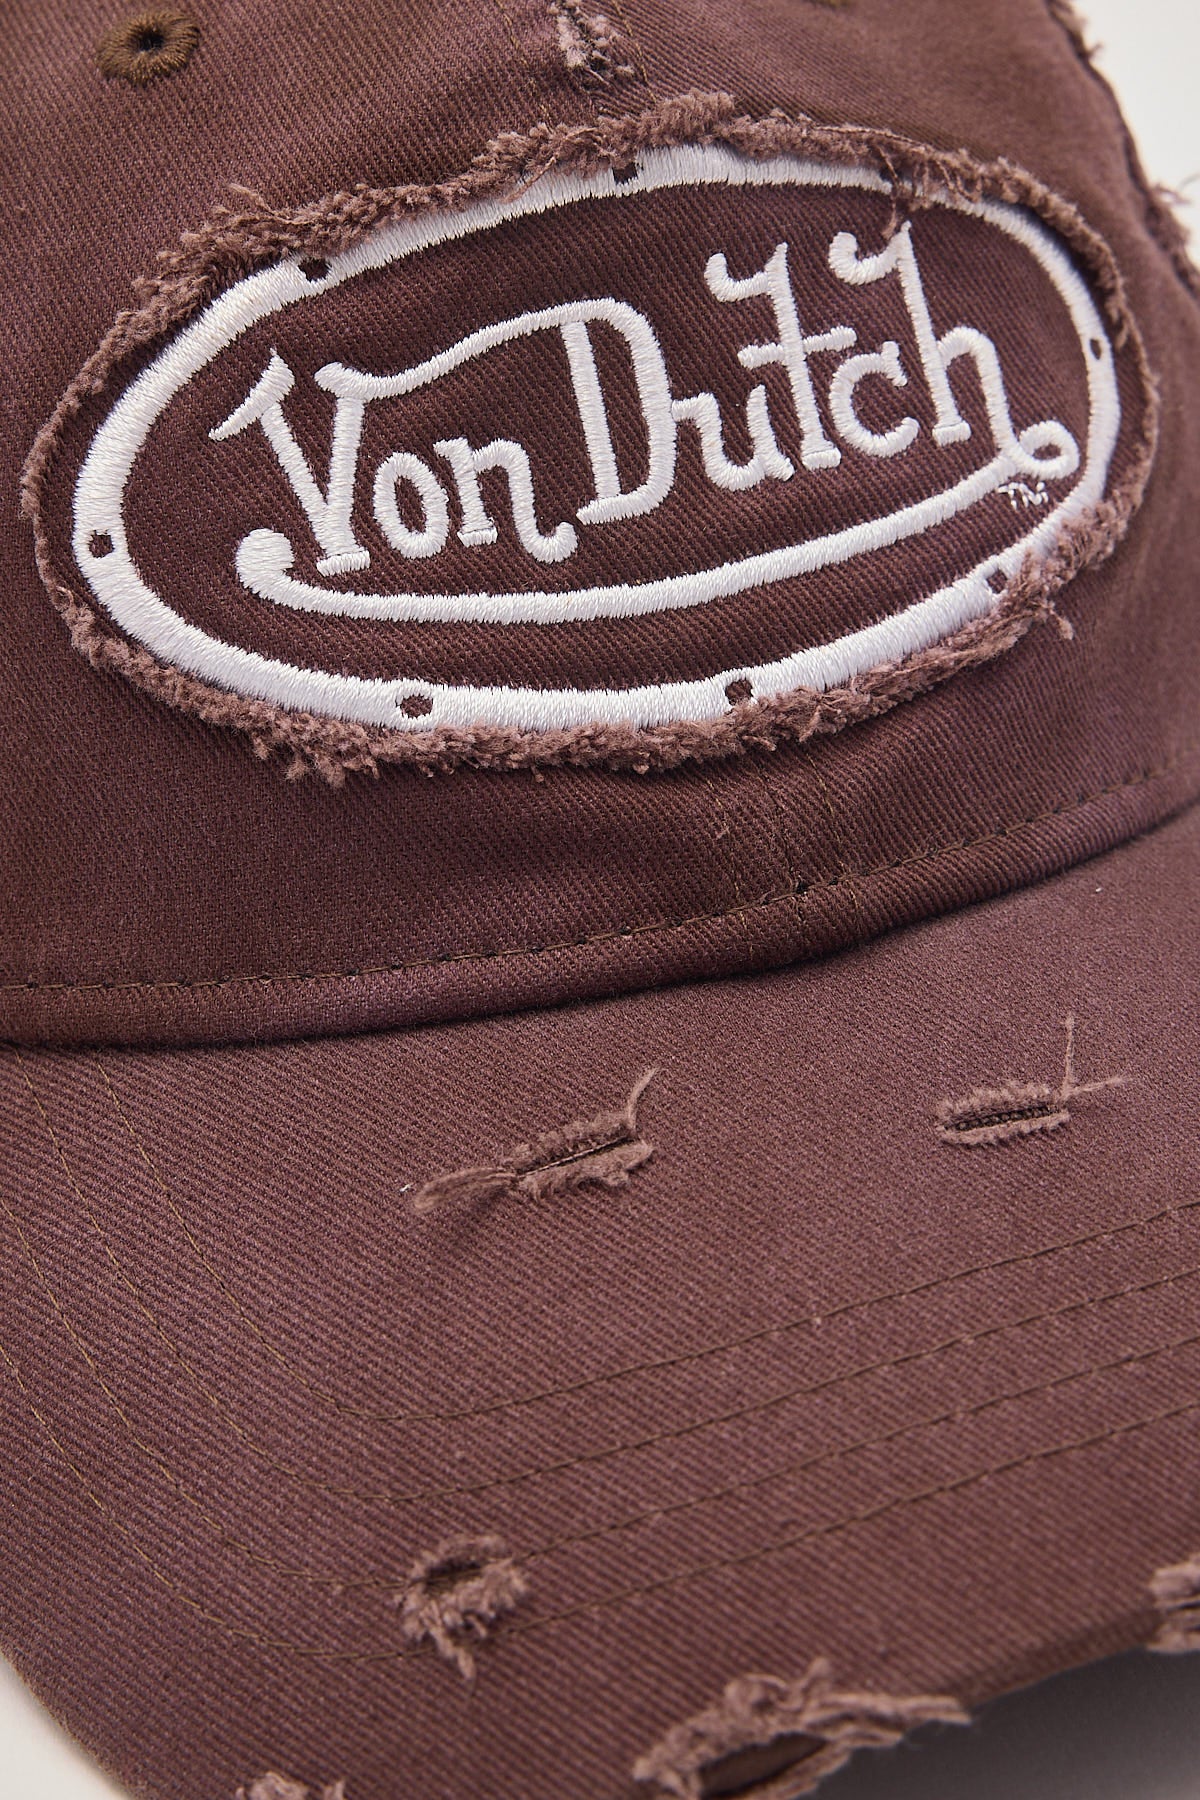 Von Dutch Distressed Embroidery Patch Dad Cap Distressed Brown